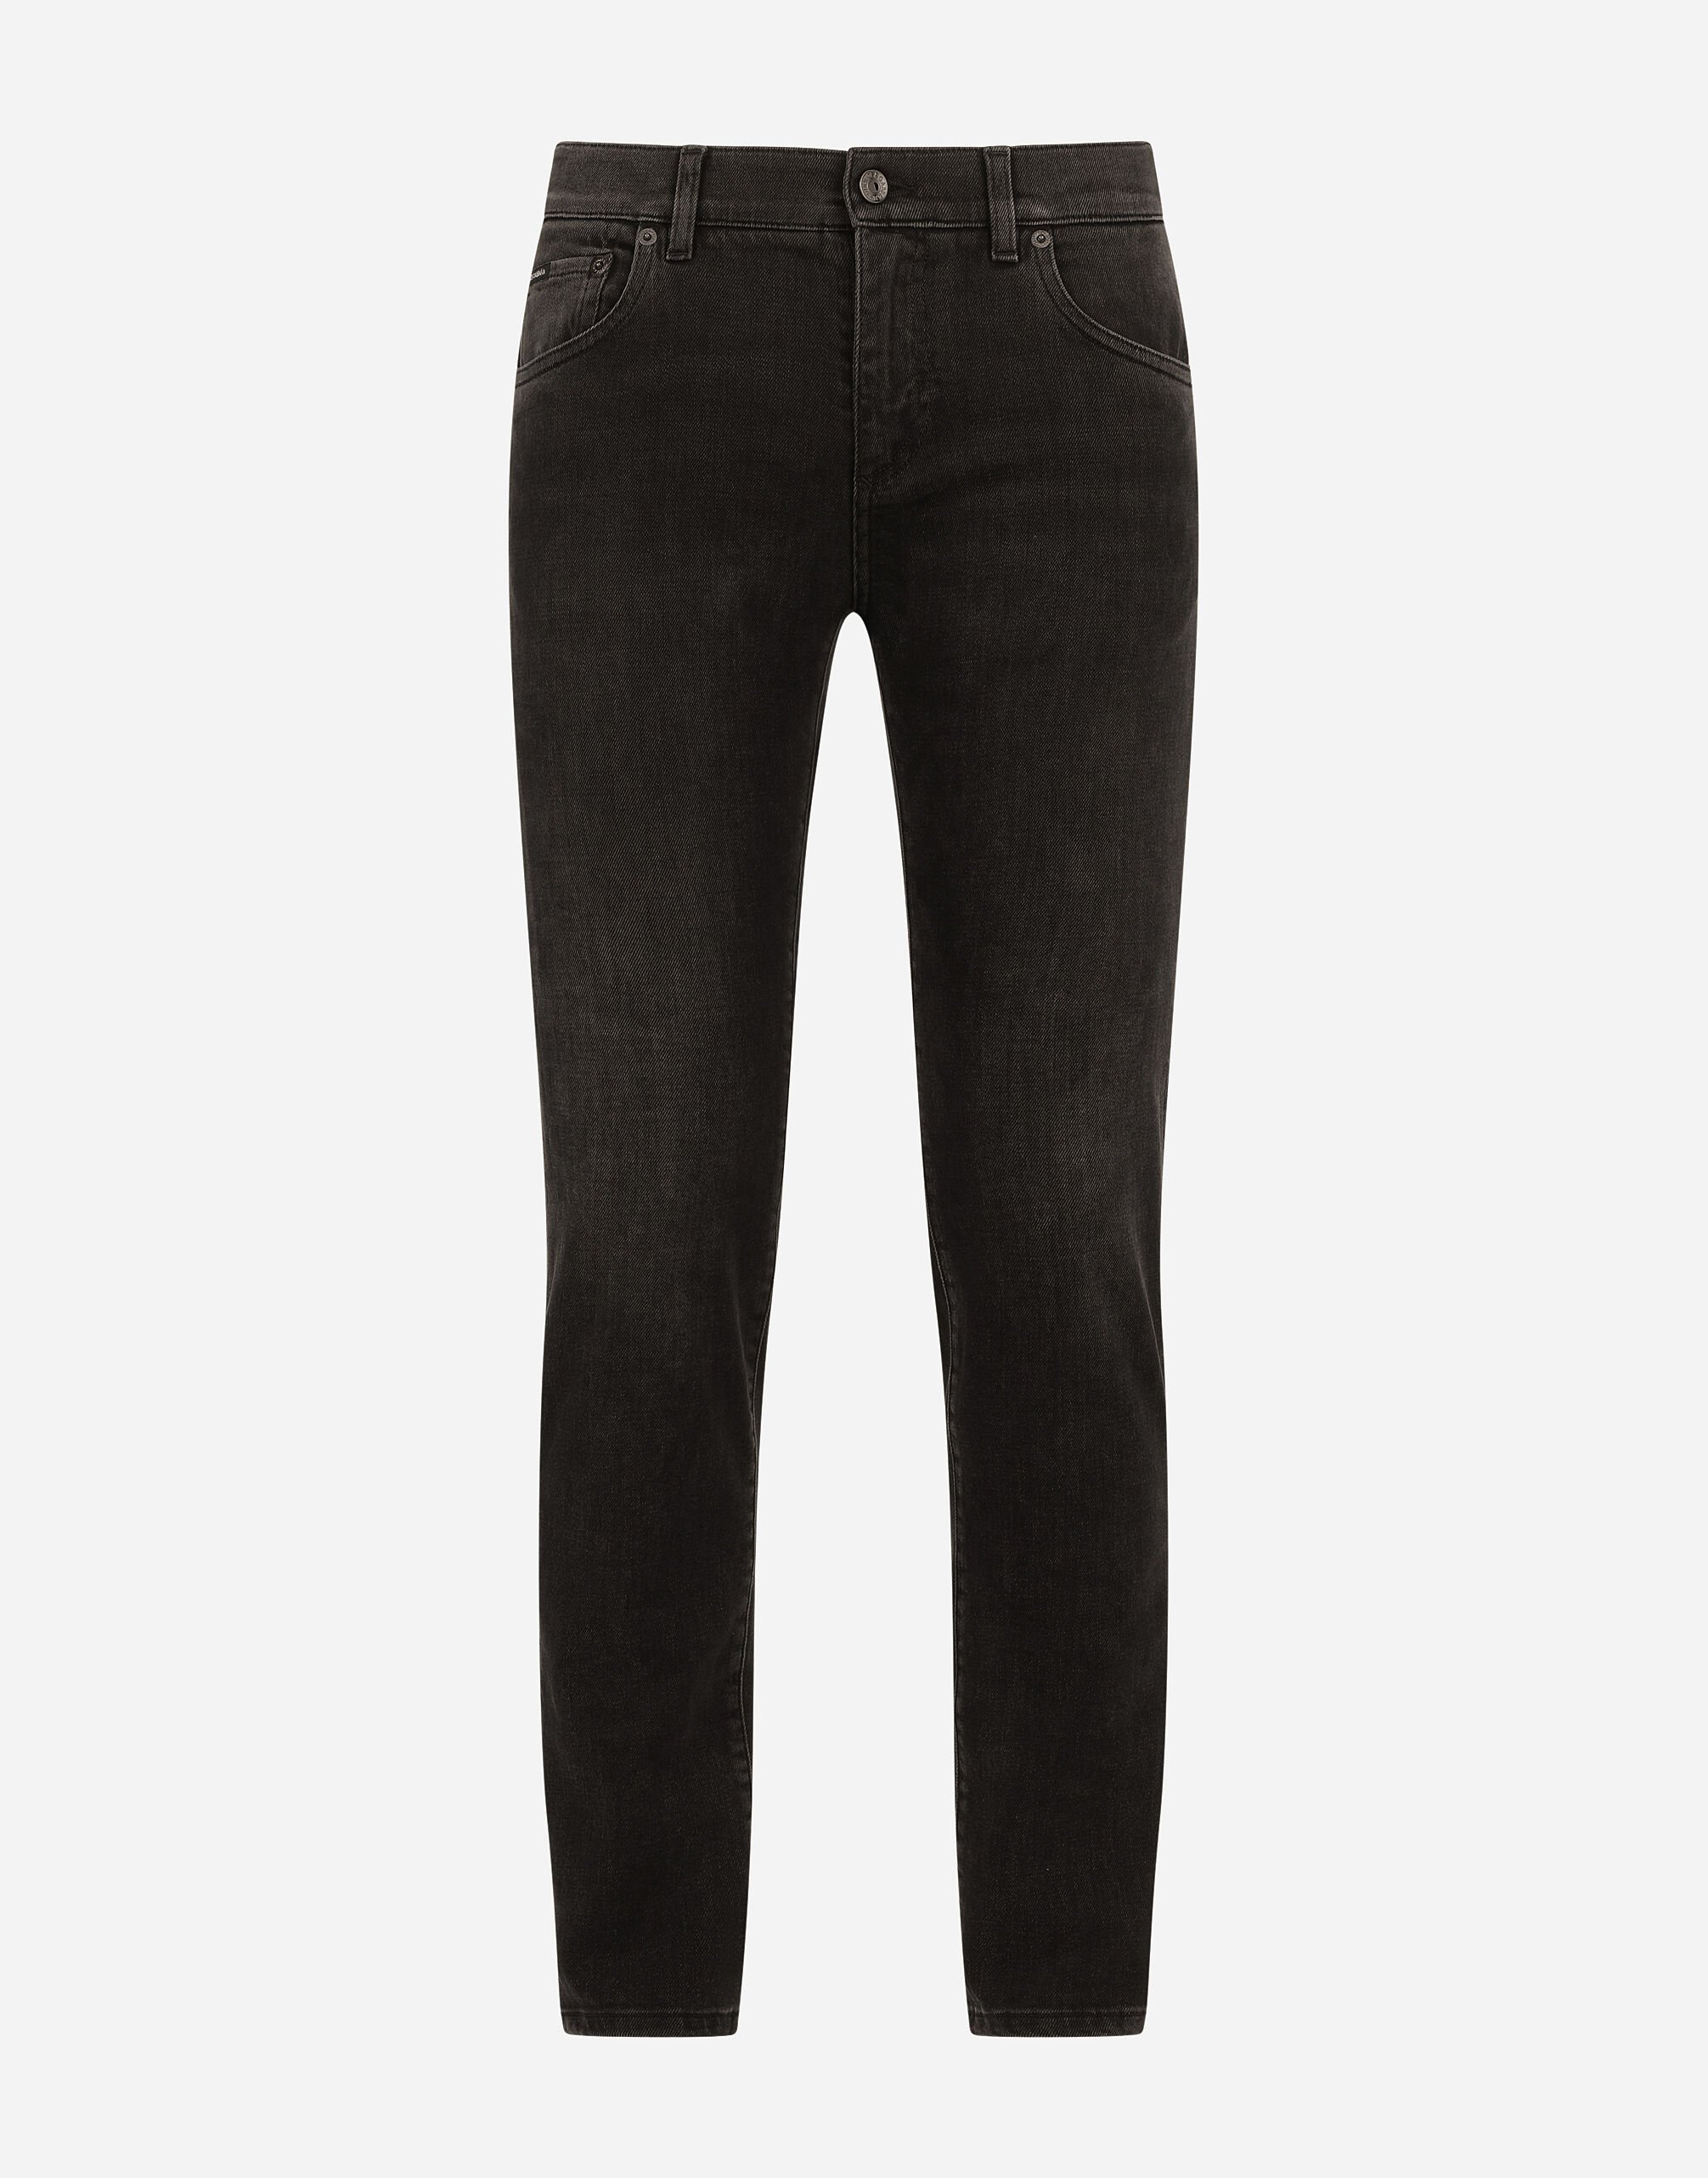 Dolce & Gabbana Black wash skinny stretch jeans Brown A50462AQ993